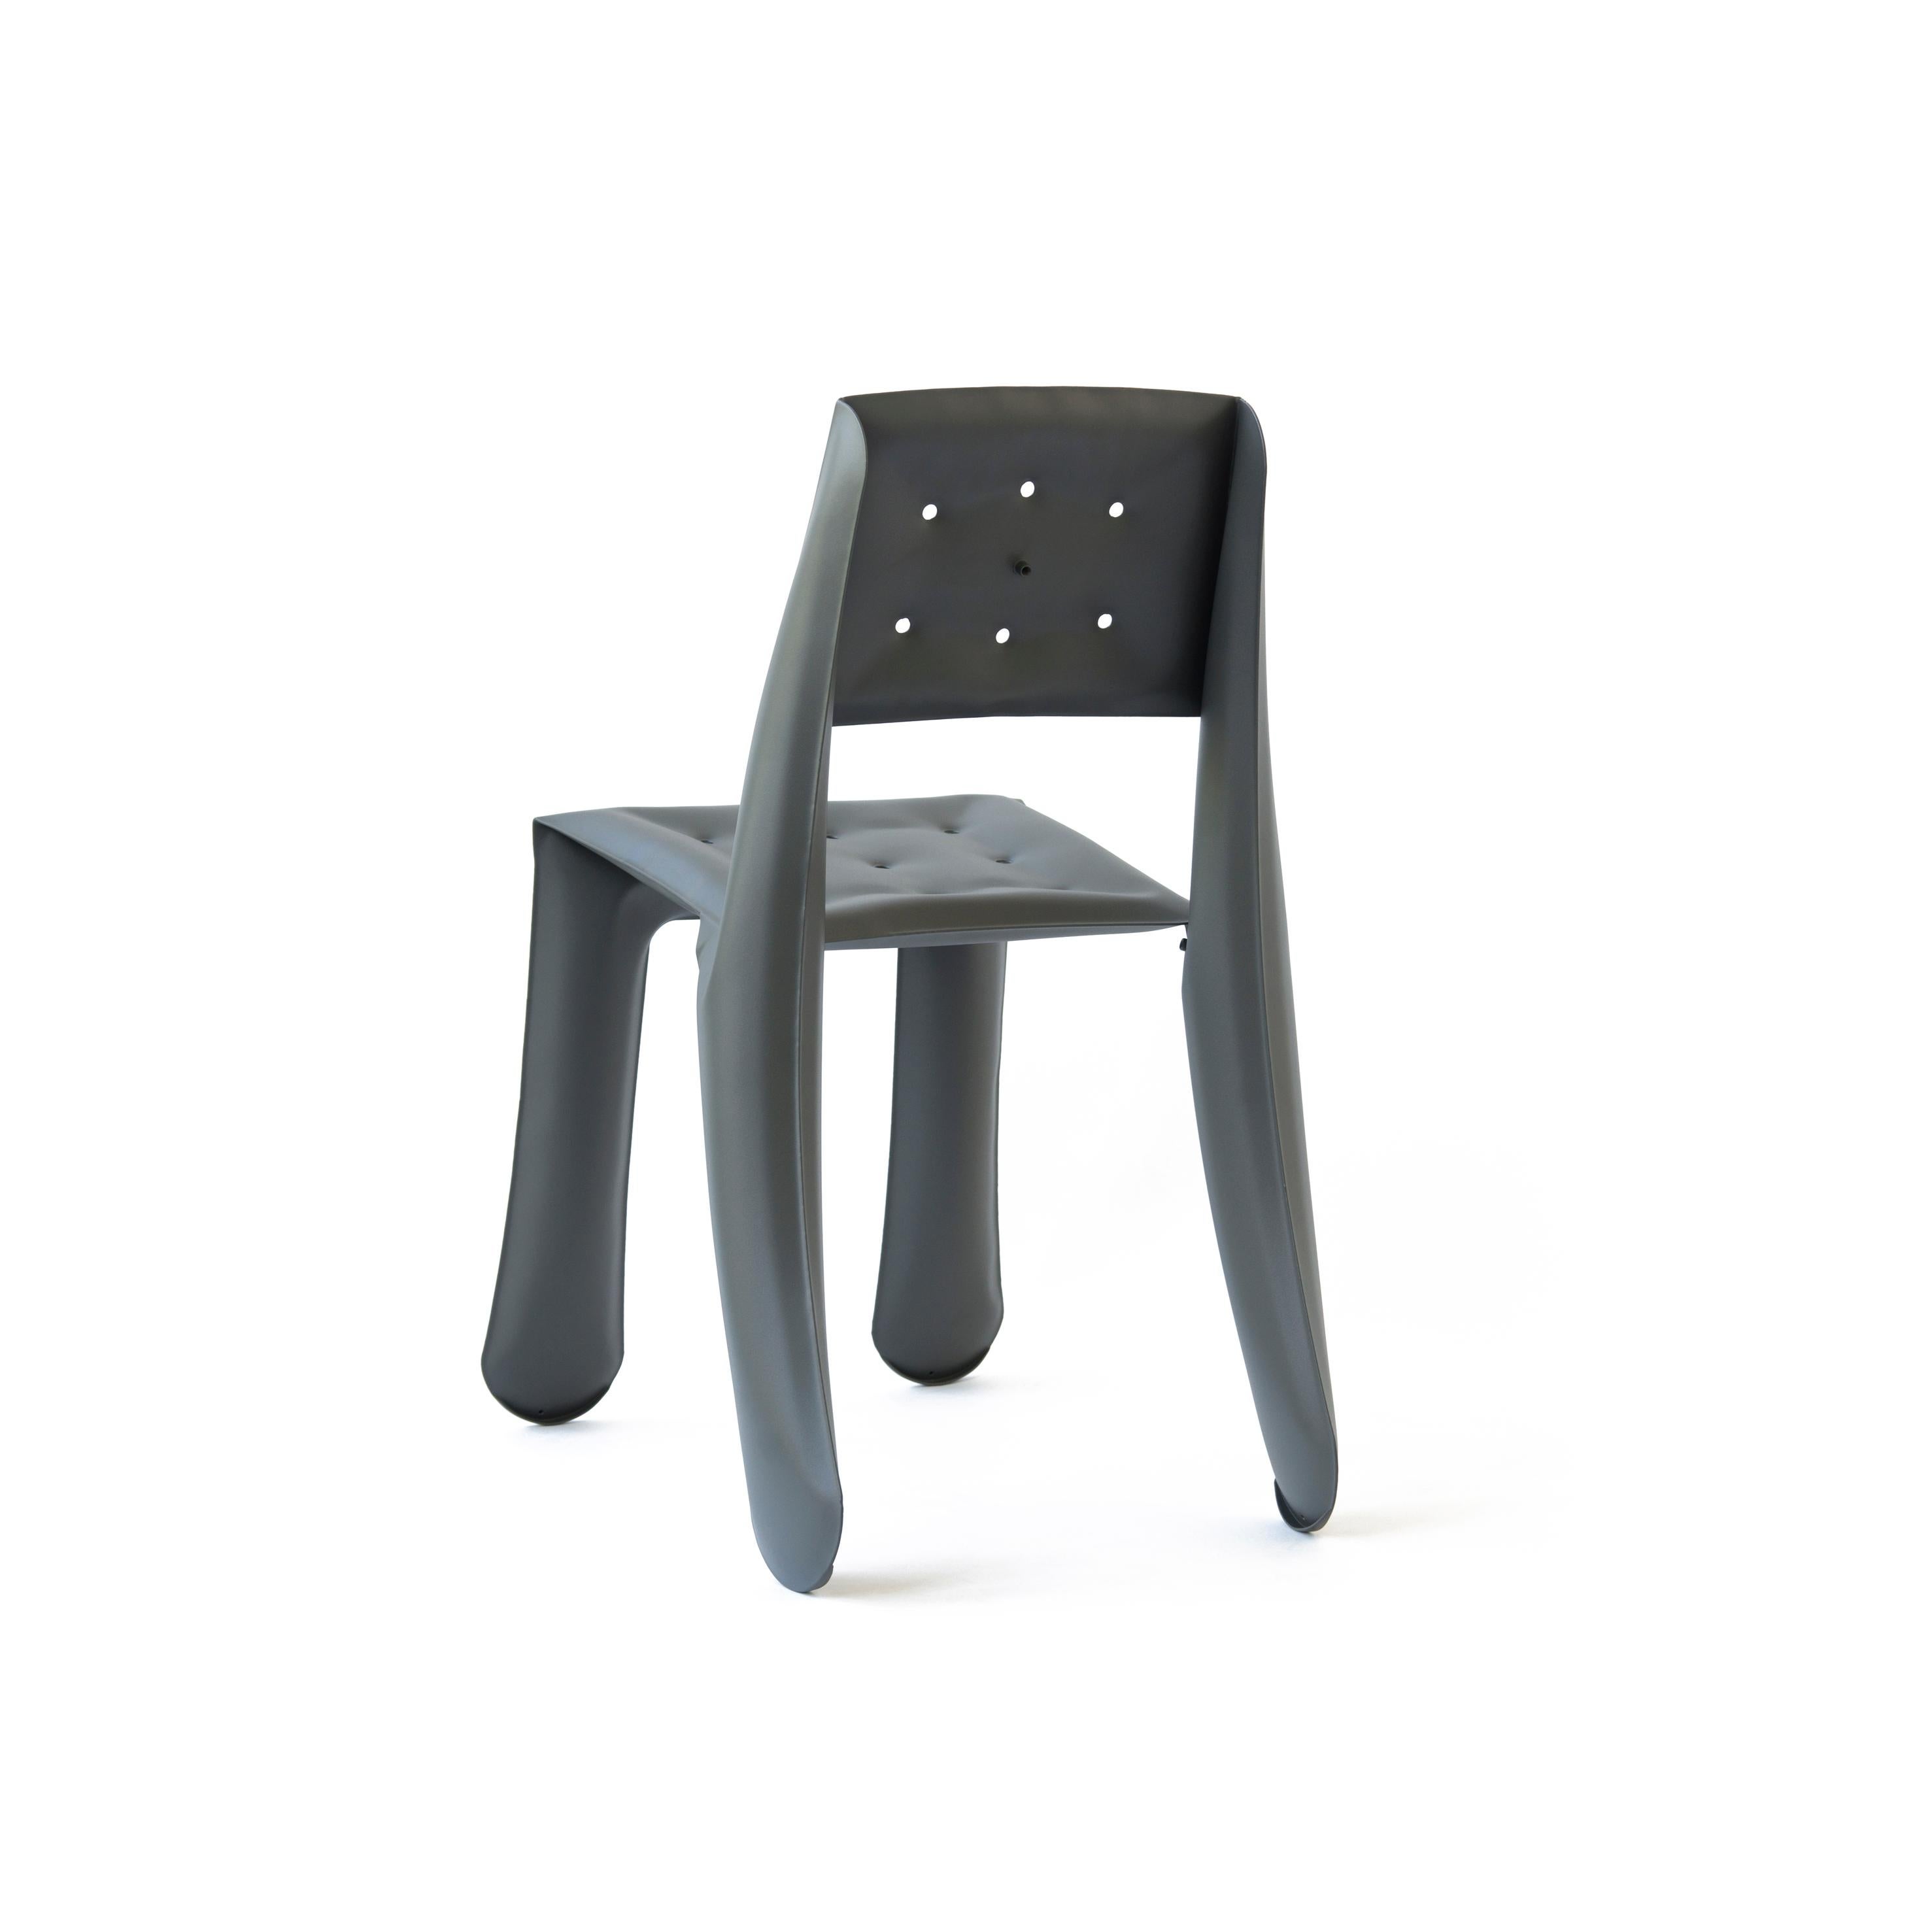 Contemporary Umbra Grey Carbon Steel Chippensteel 0.5 Sculptural Chair by Zieta For Sale